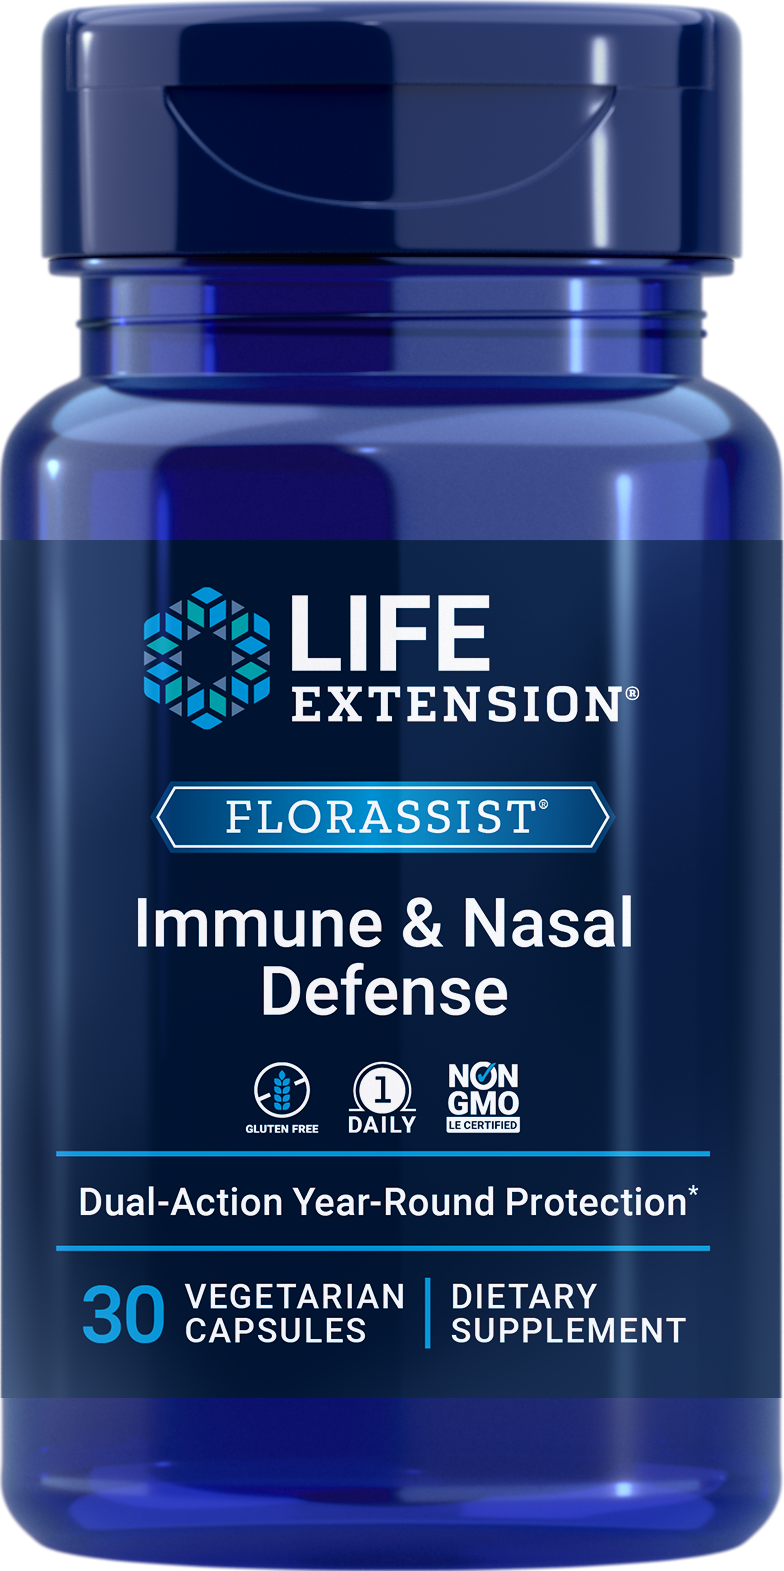 Life Extension's New Florassist Immune & Nasal Defense probiotic